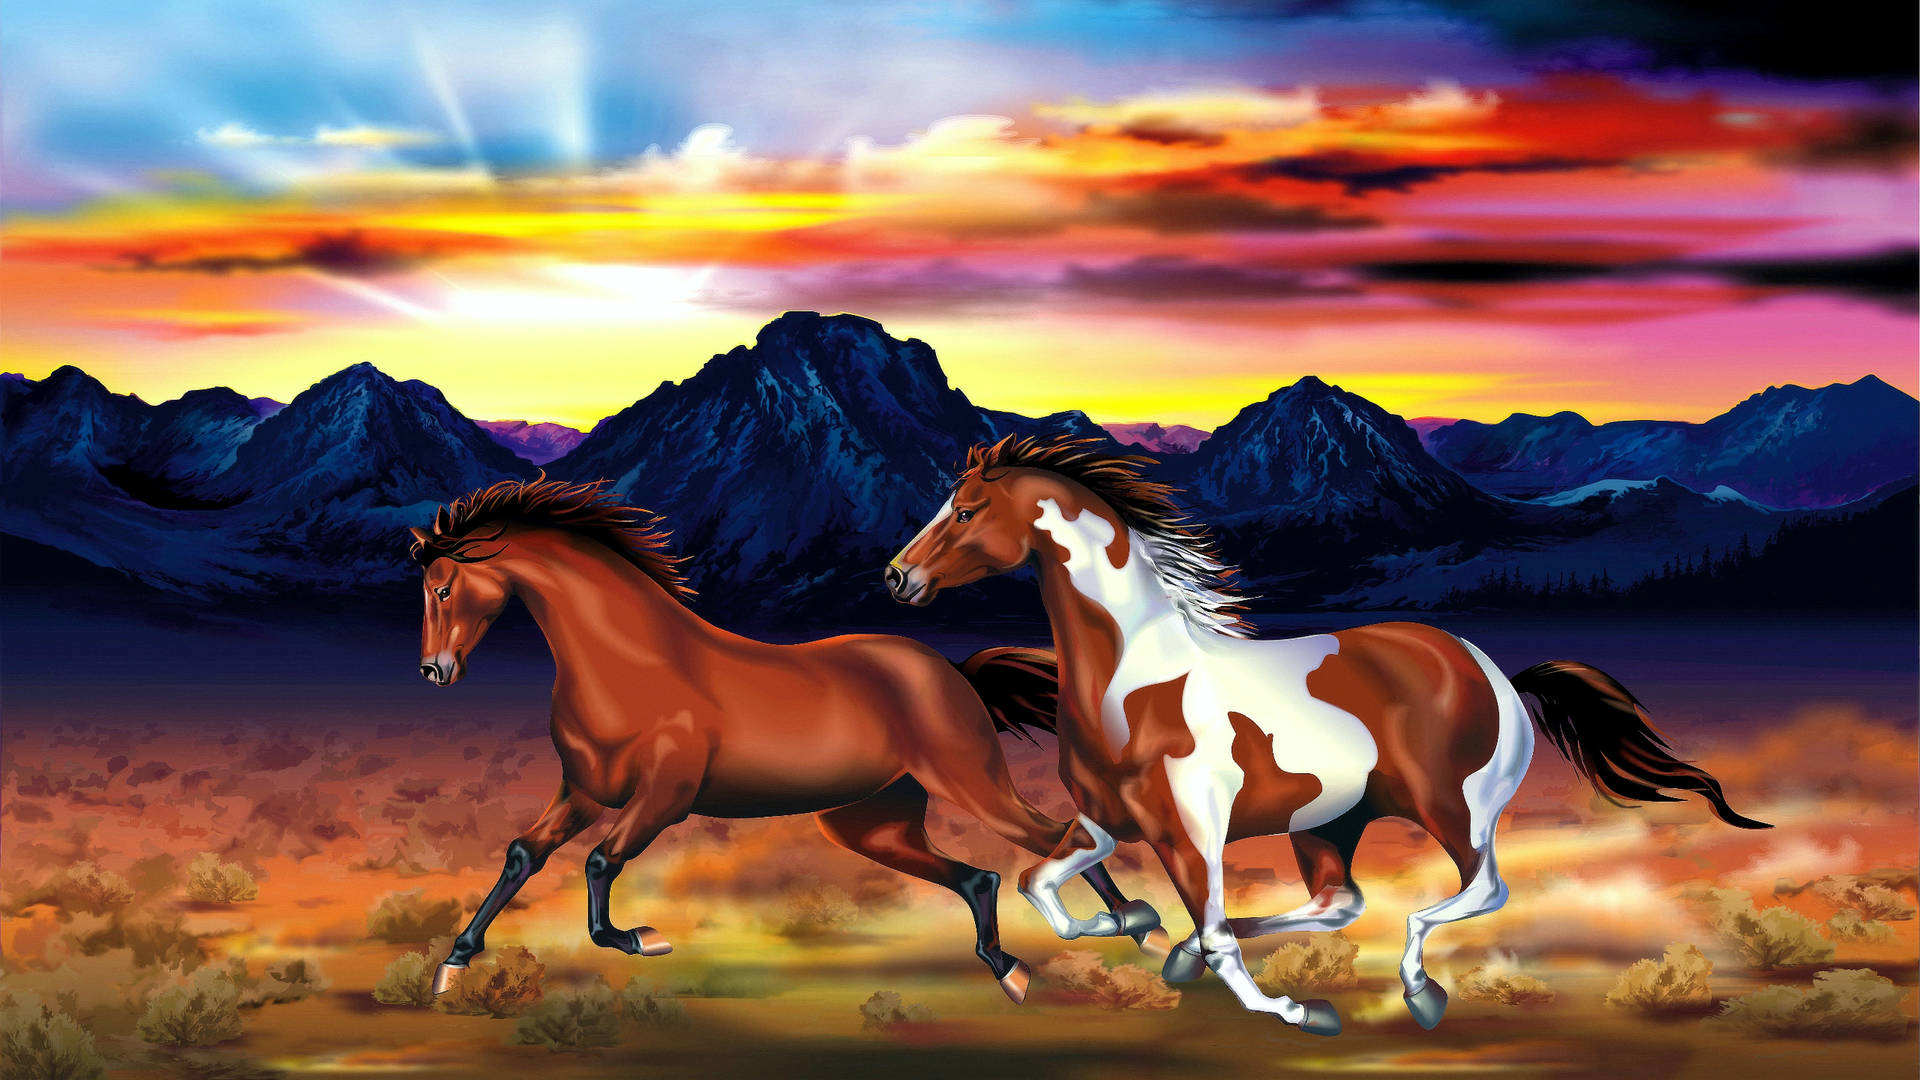 Running Horse Digital Artwork Background